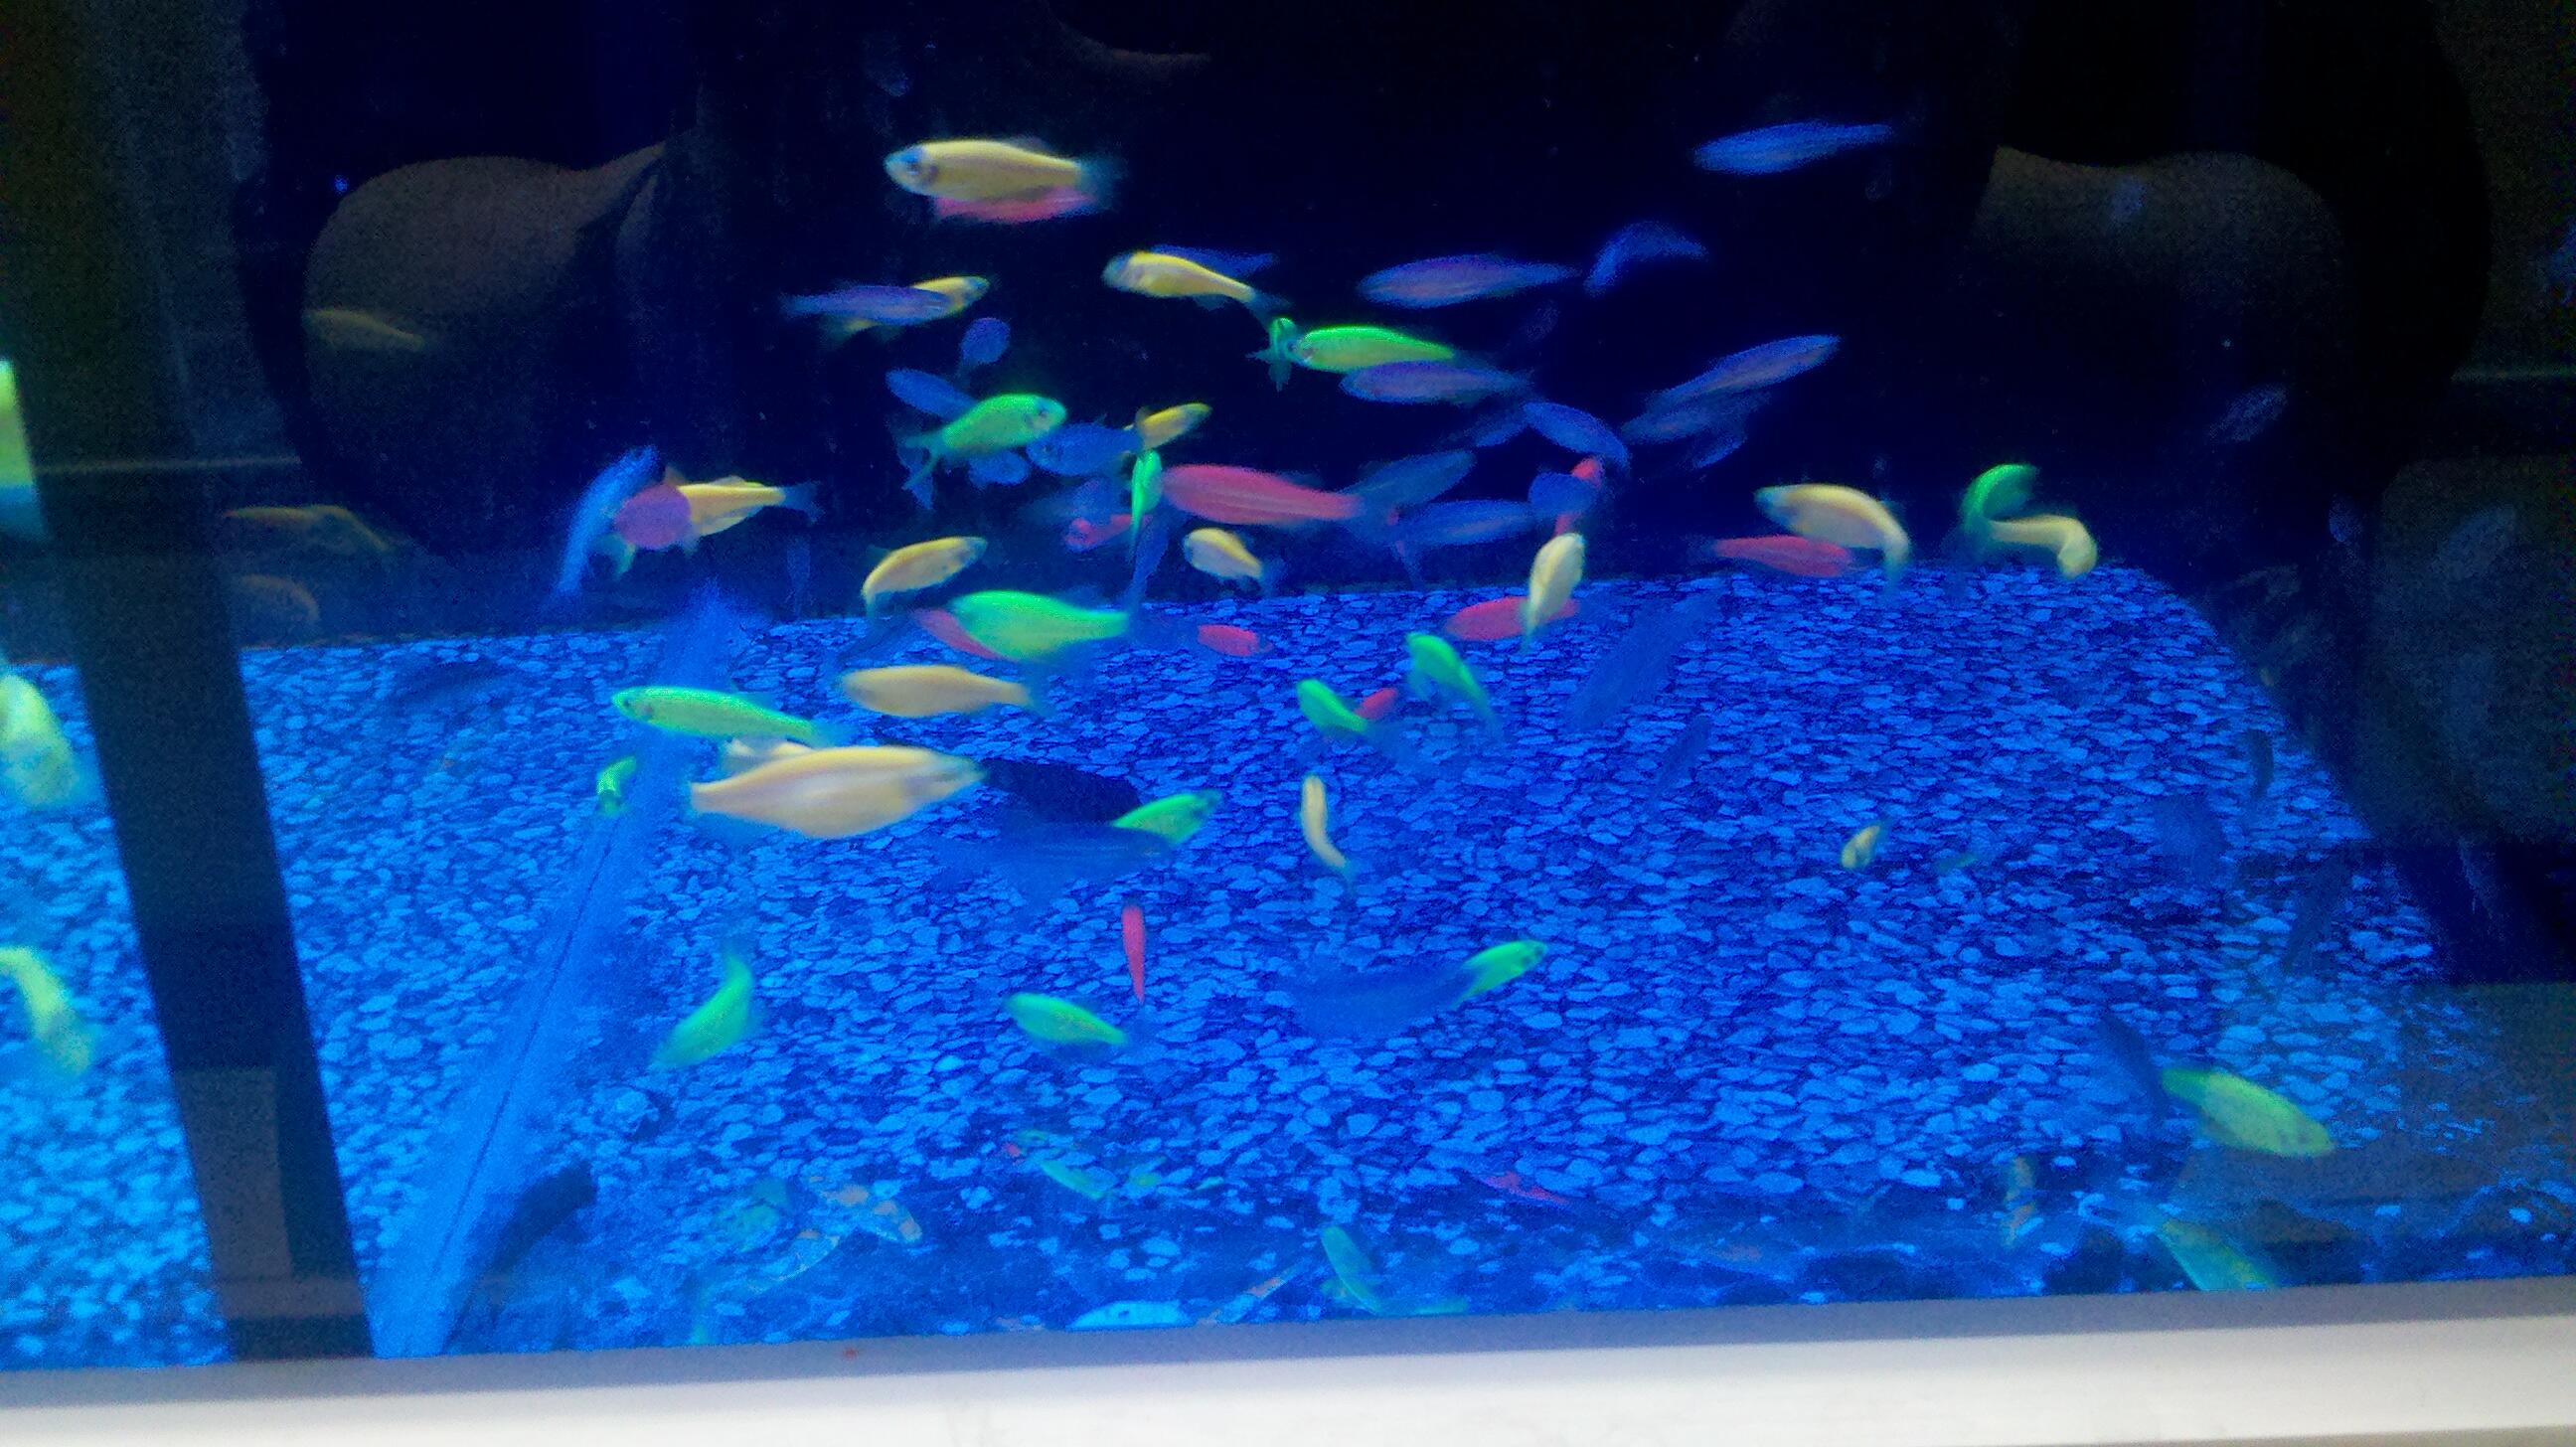 kaylee smith on X: @liddyluvsklaine THEY HAVE NEON RAINBOW FISH AT WALMART!   / X